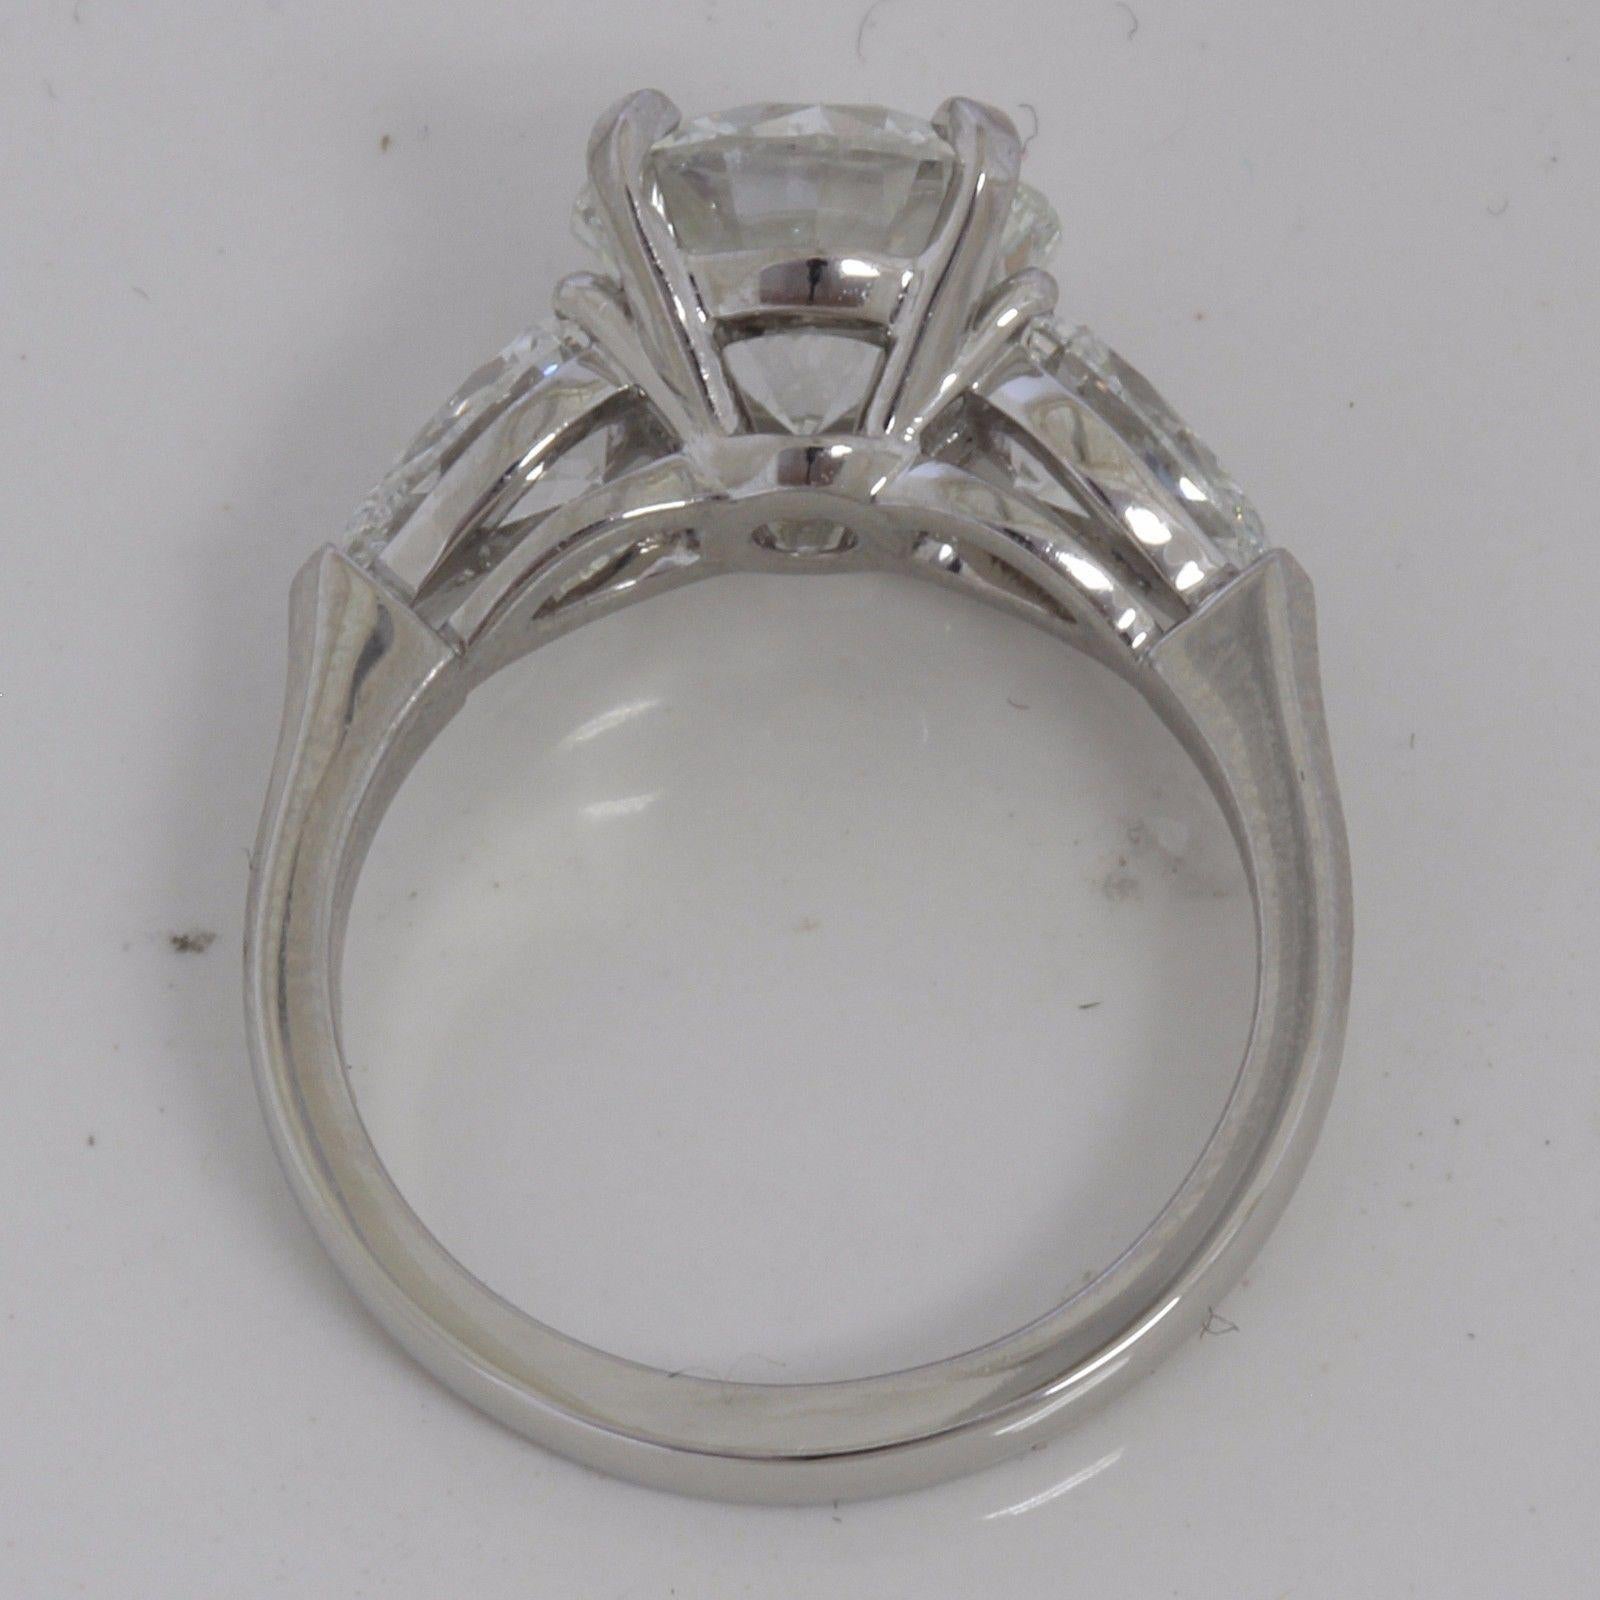 2 carat round diamond ring